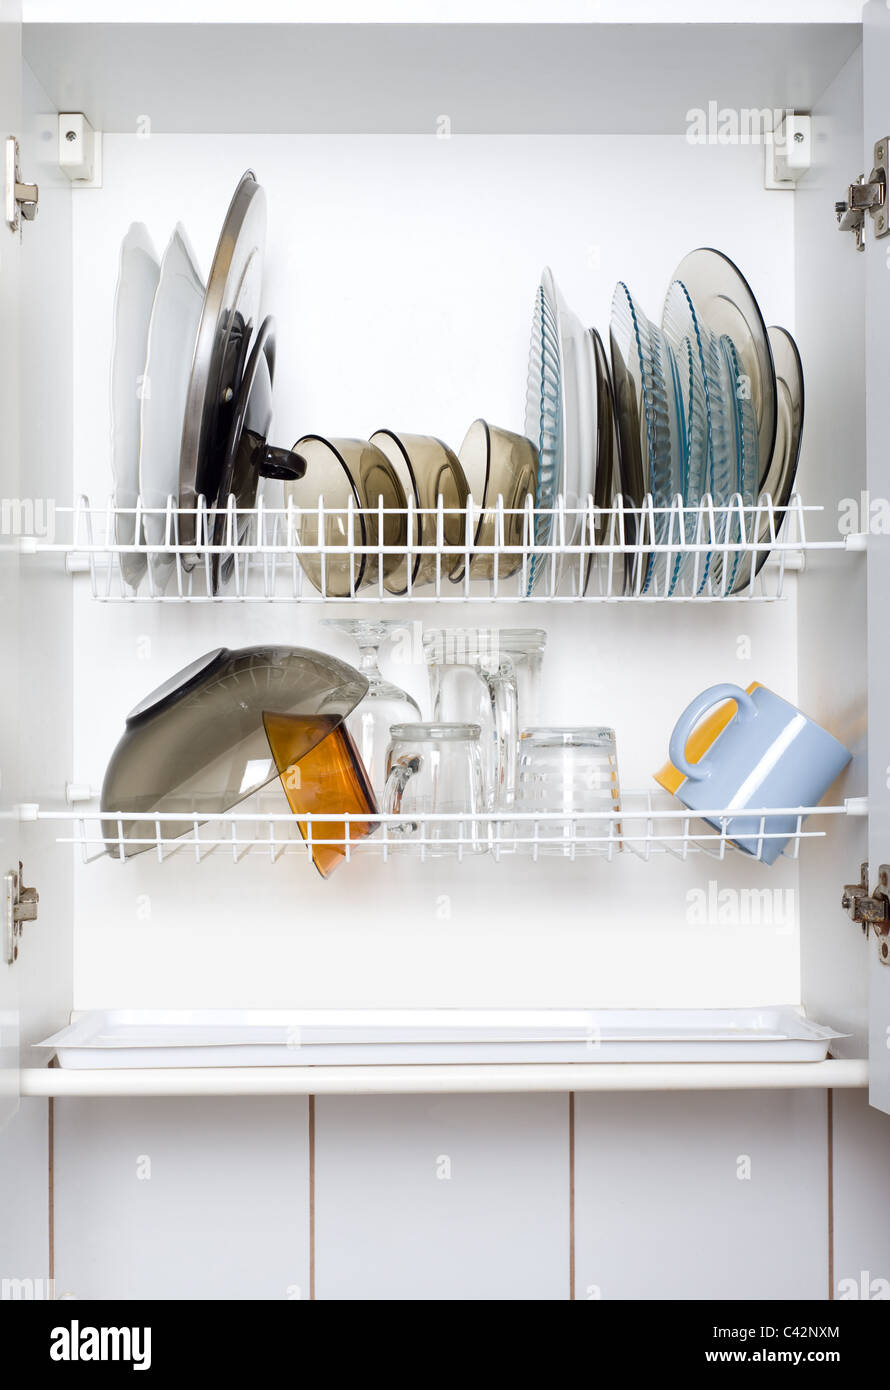 https://c8.alamy.com/comp/C42NXM/open-white-dish-draining-closet-with-wet-dishes-C42NXM.jpg